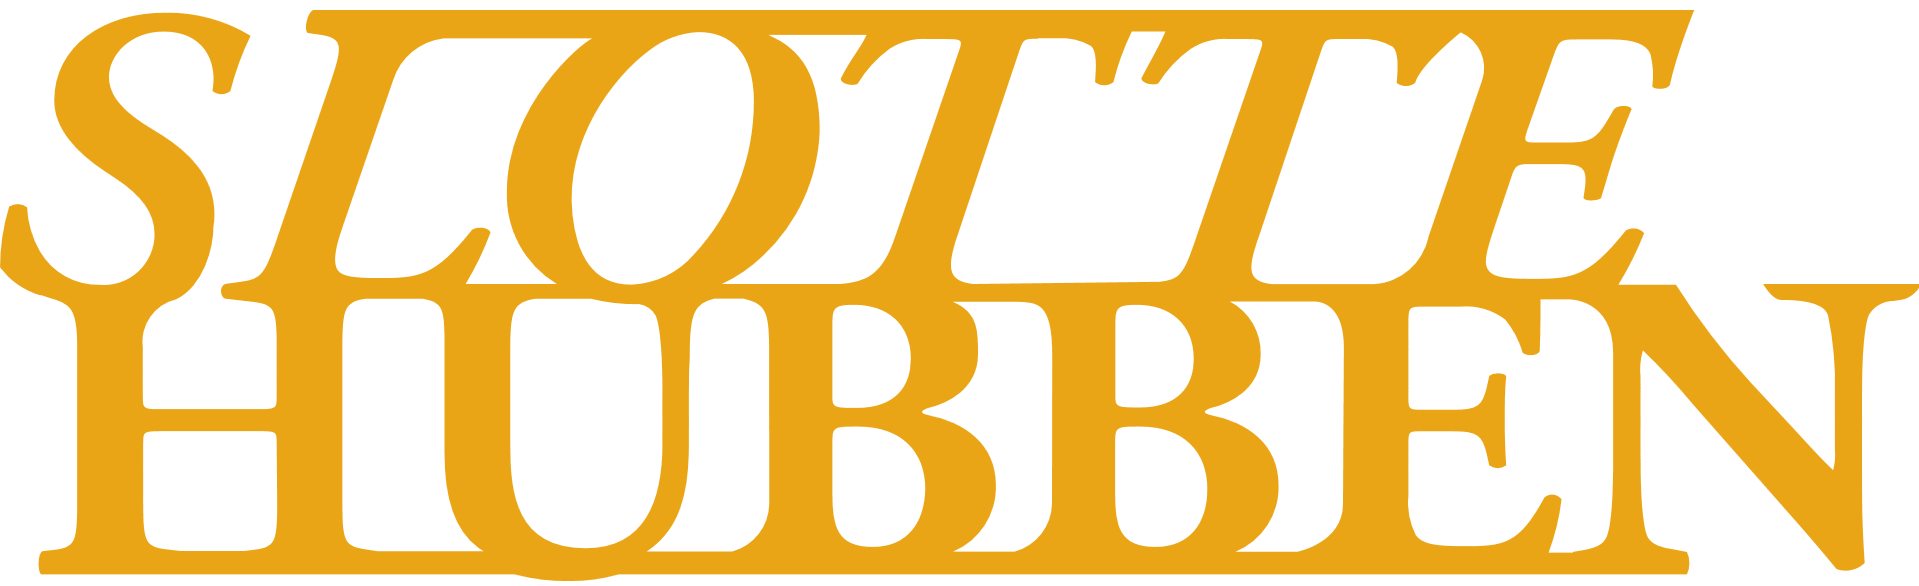 Logo Slottehubben